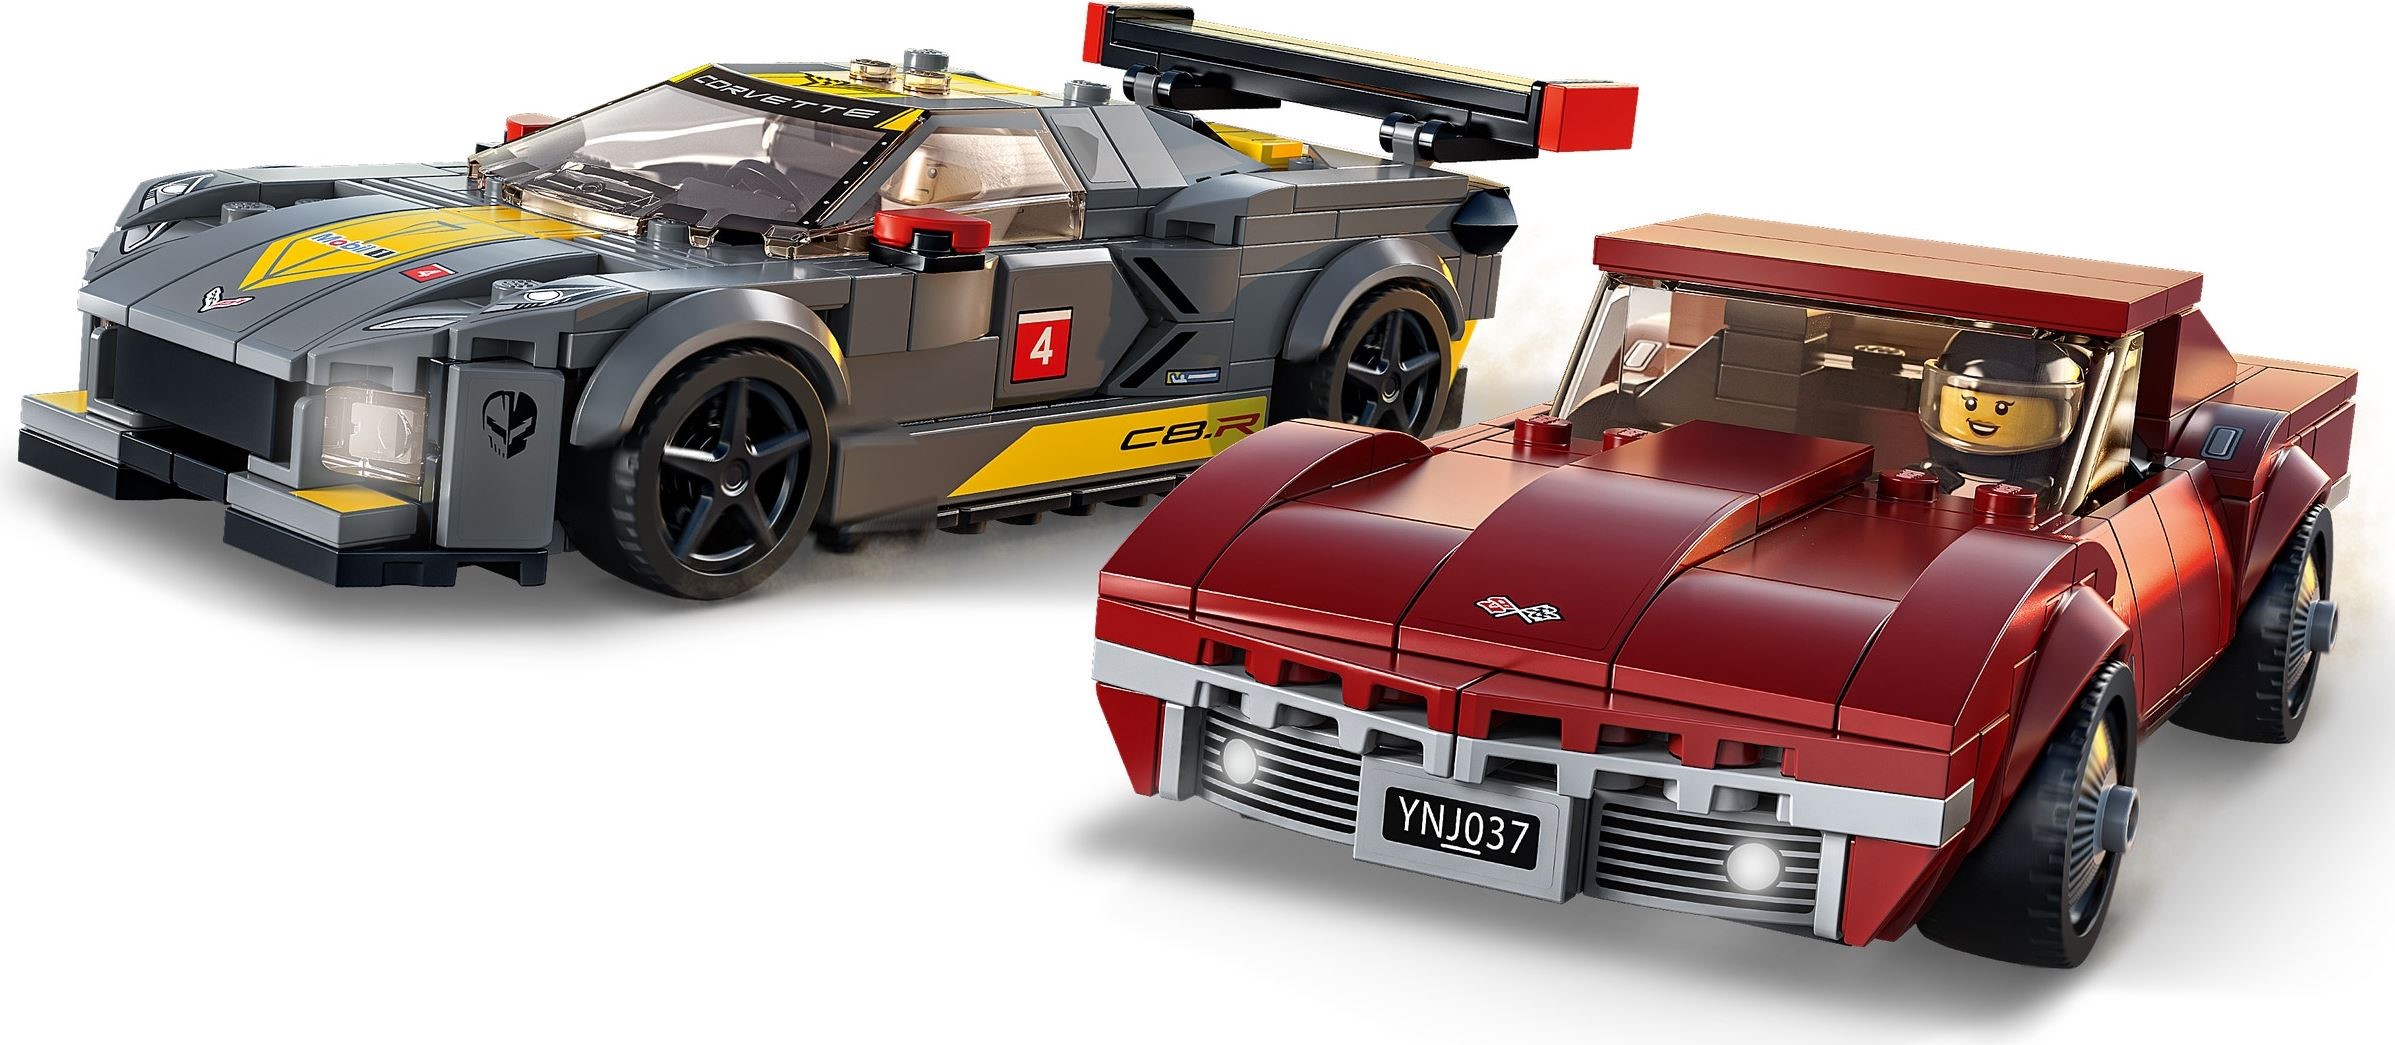 76903 LEGO Speed Champions Chevrolet Corvette C8.R Race Car and 1968 Chevrolet Corvette